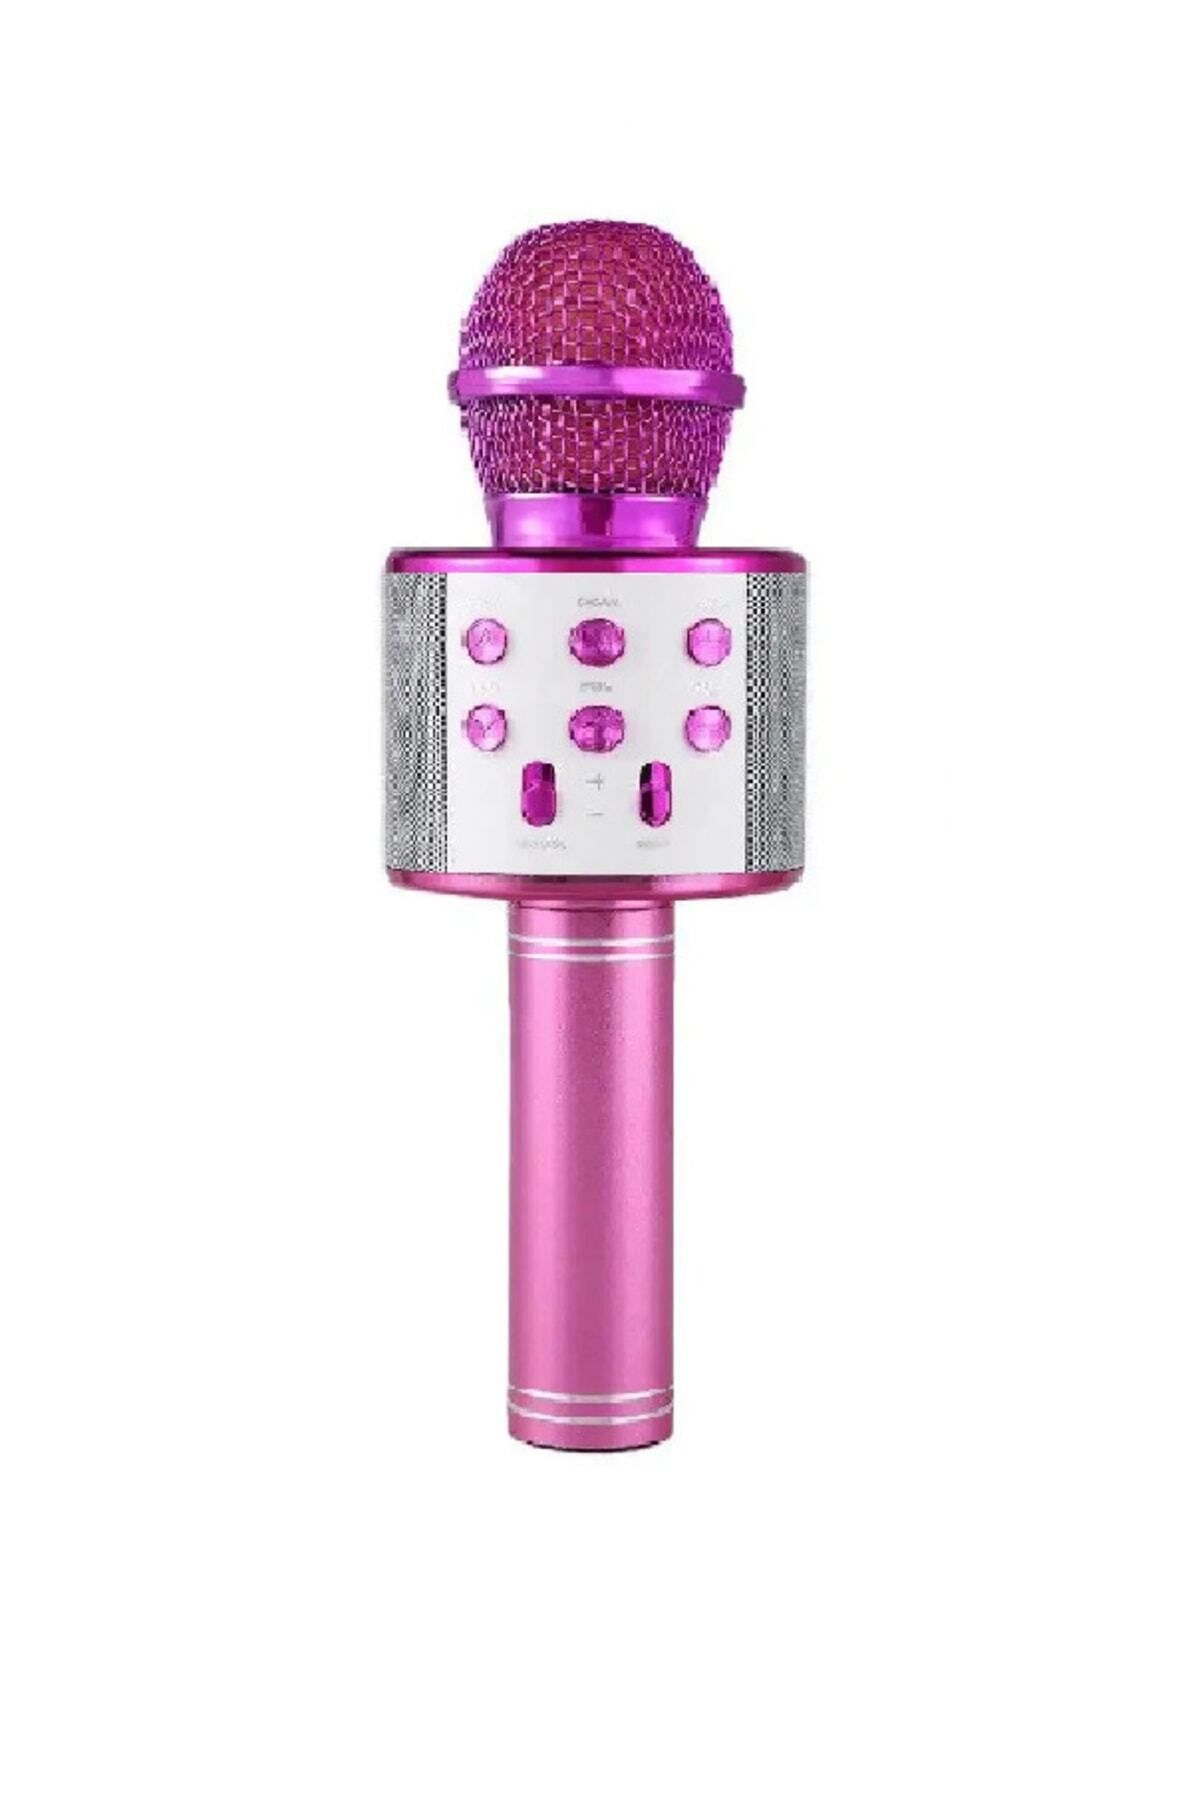 FİOPLUS Karaoke Bluetooth Mikrofon Hoparlörlü Usb Flash Destekli Ws-858